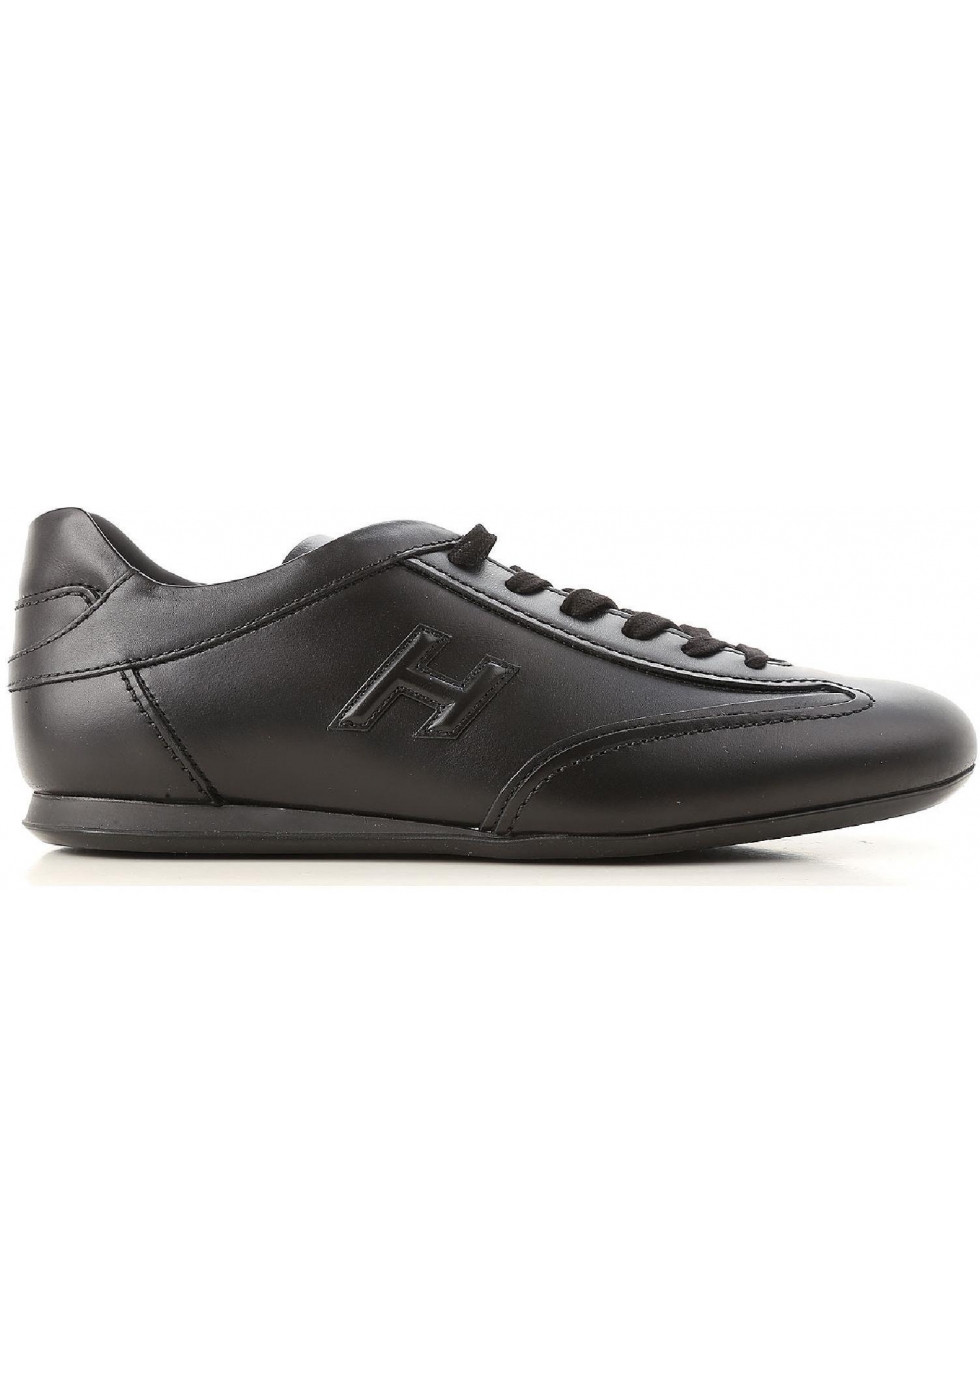 Hogan OLYMPIA SLASH low man's Sneakers in black leather - Italian Boutique